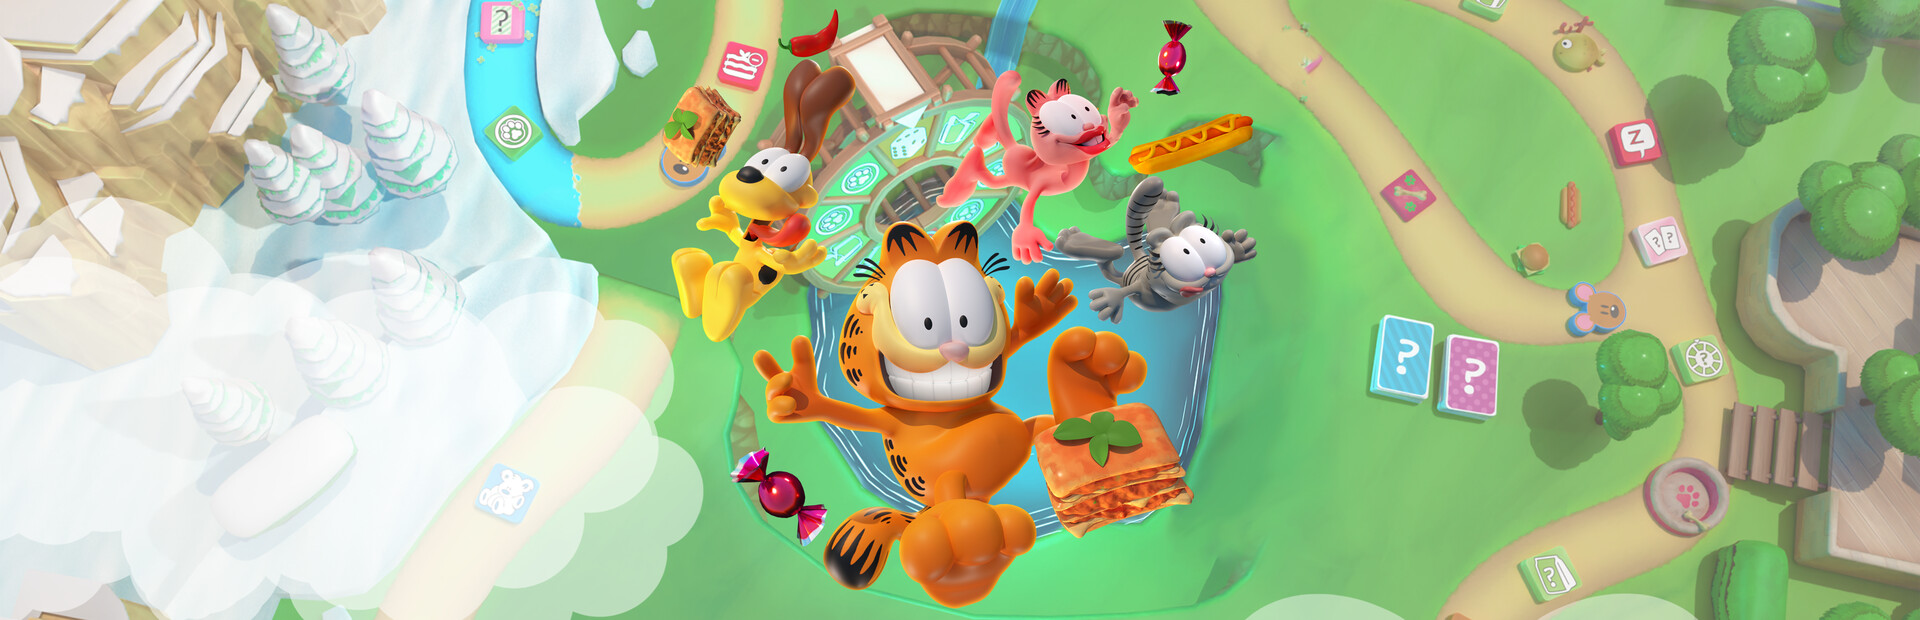 Garfield Lasagna Party cover image